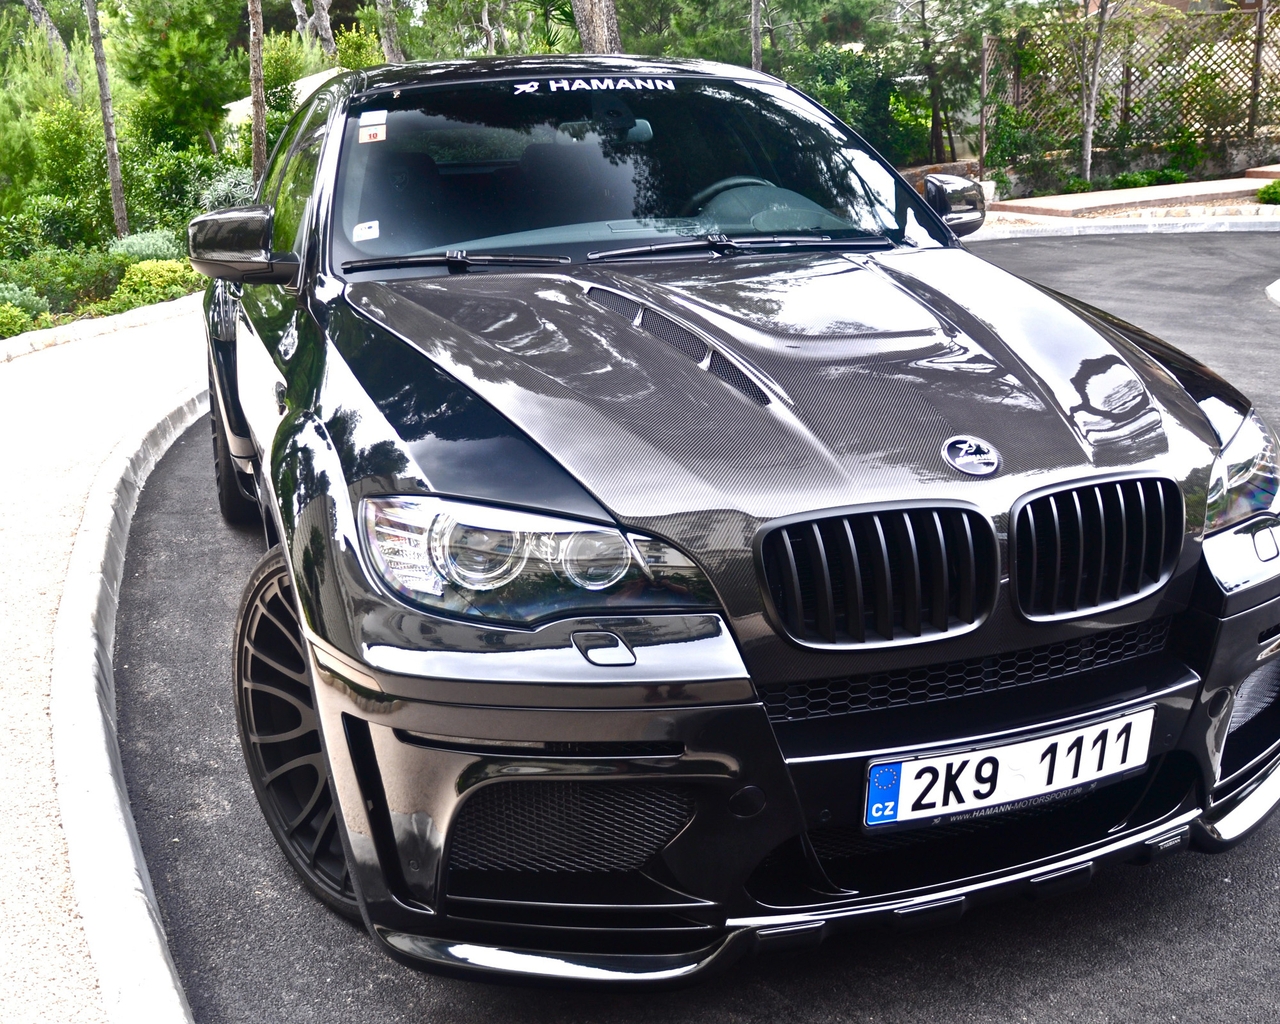 Картинка: BMW, x6, в повороте, перед, отражение